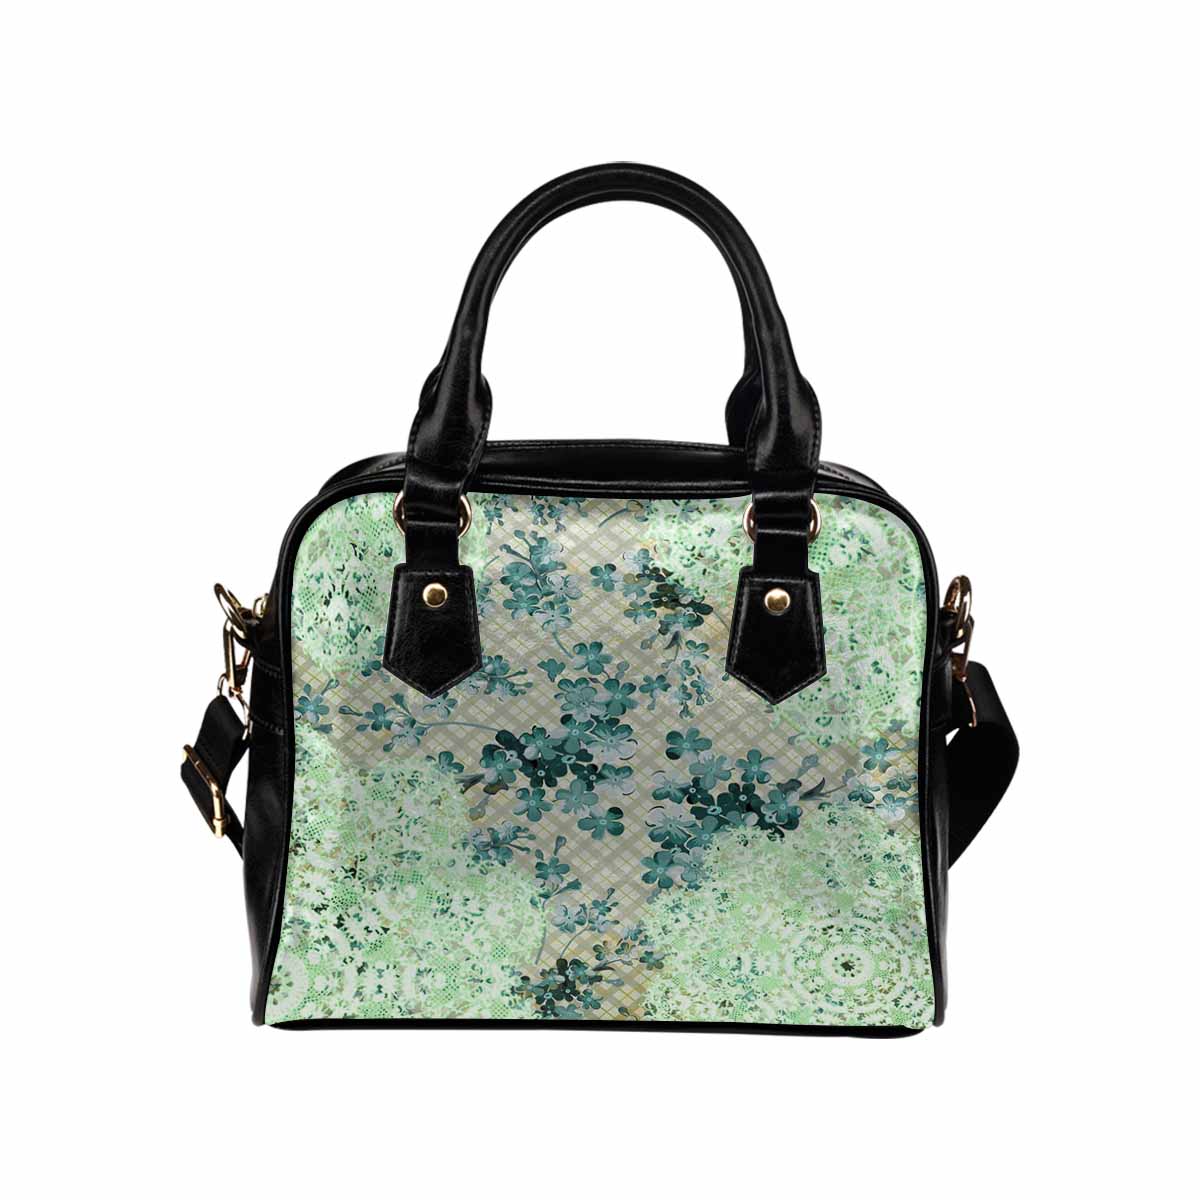 Victorian lace print, cute handbag, Mod 19163453, design 53